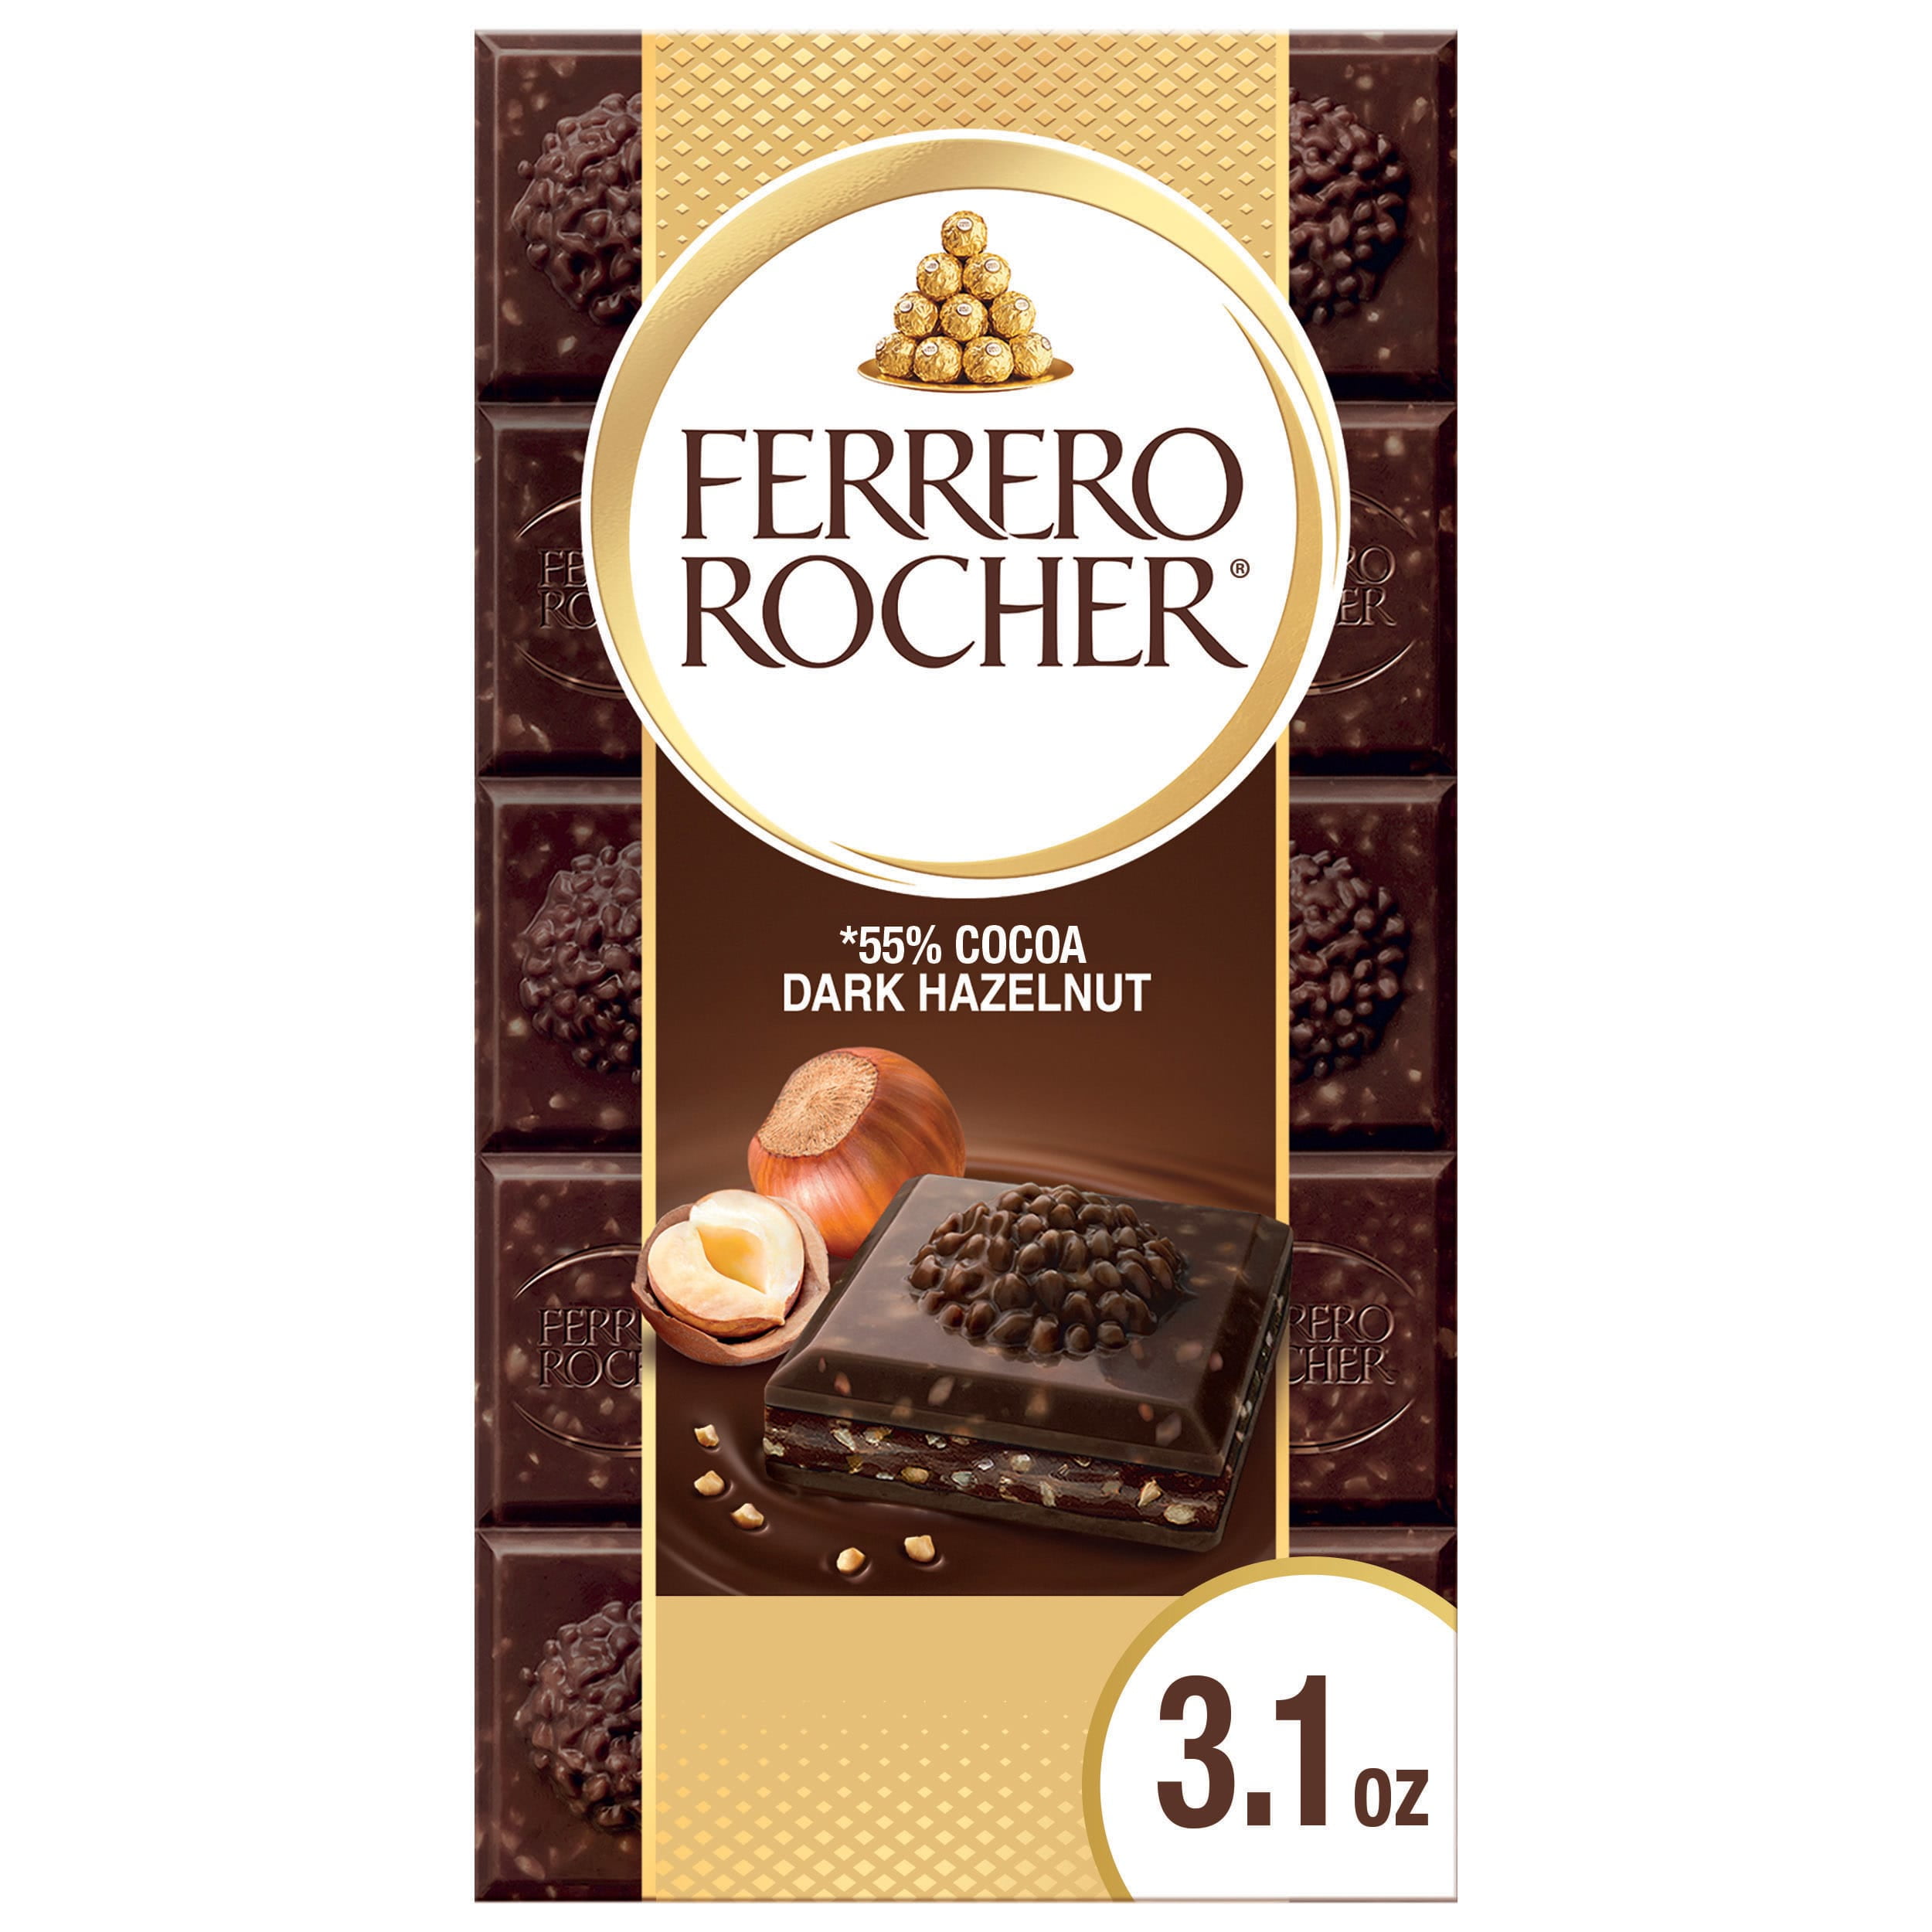 Ferrero Rocher Premium Chocolate Bar, Dark Chocolate Hazelnut, A Great Easter Gift, 3.1 oz